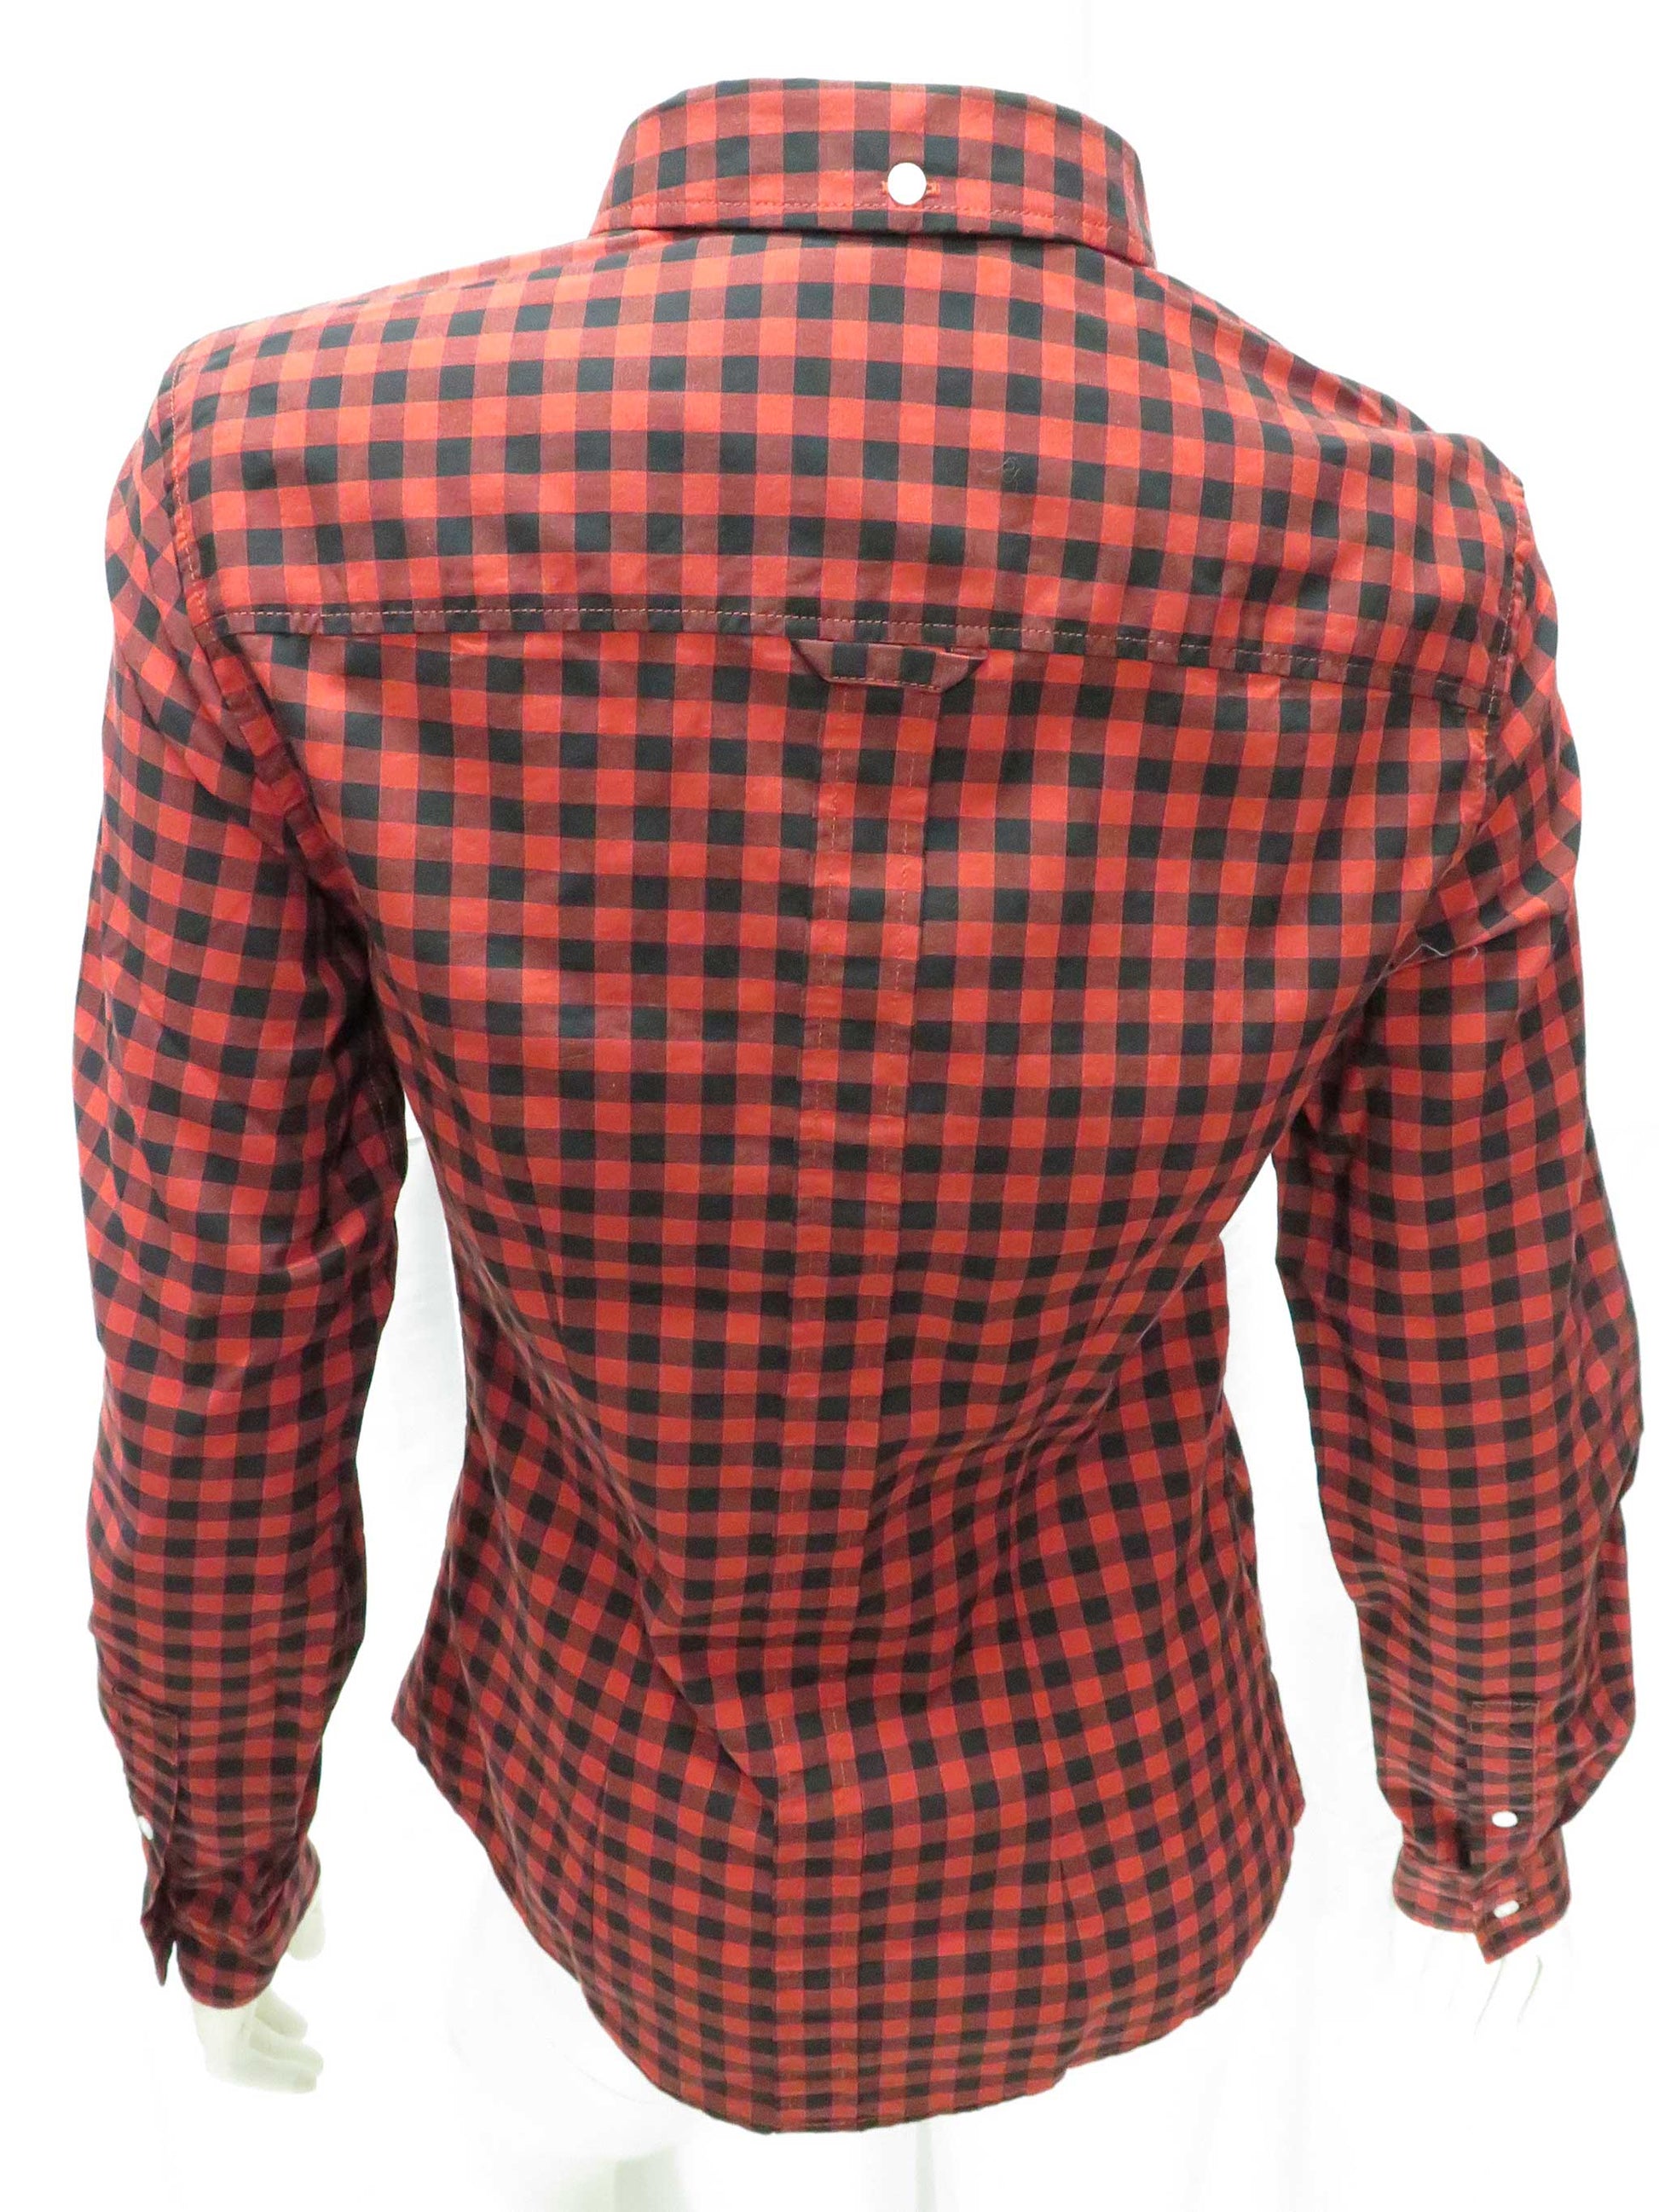 Gingham Button-Down L/S Shirt (rich rust)